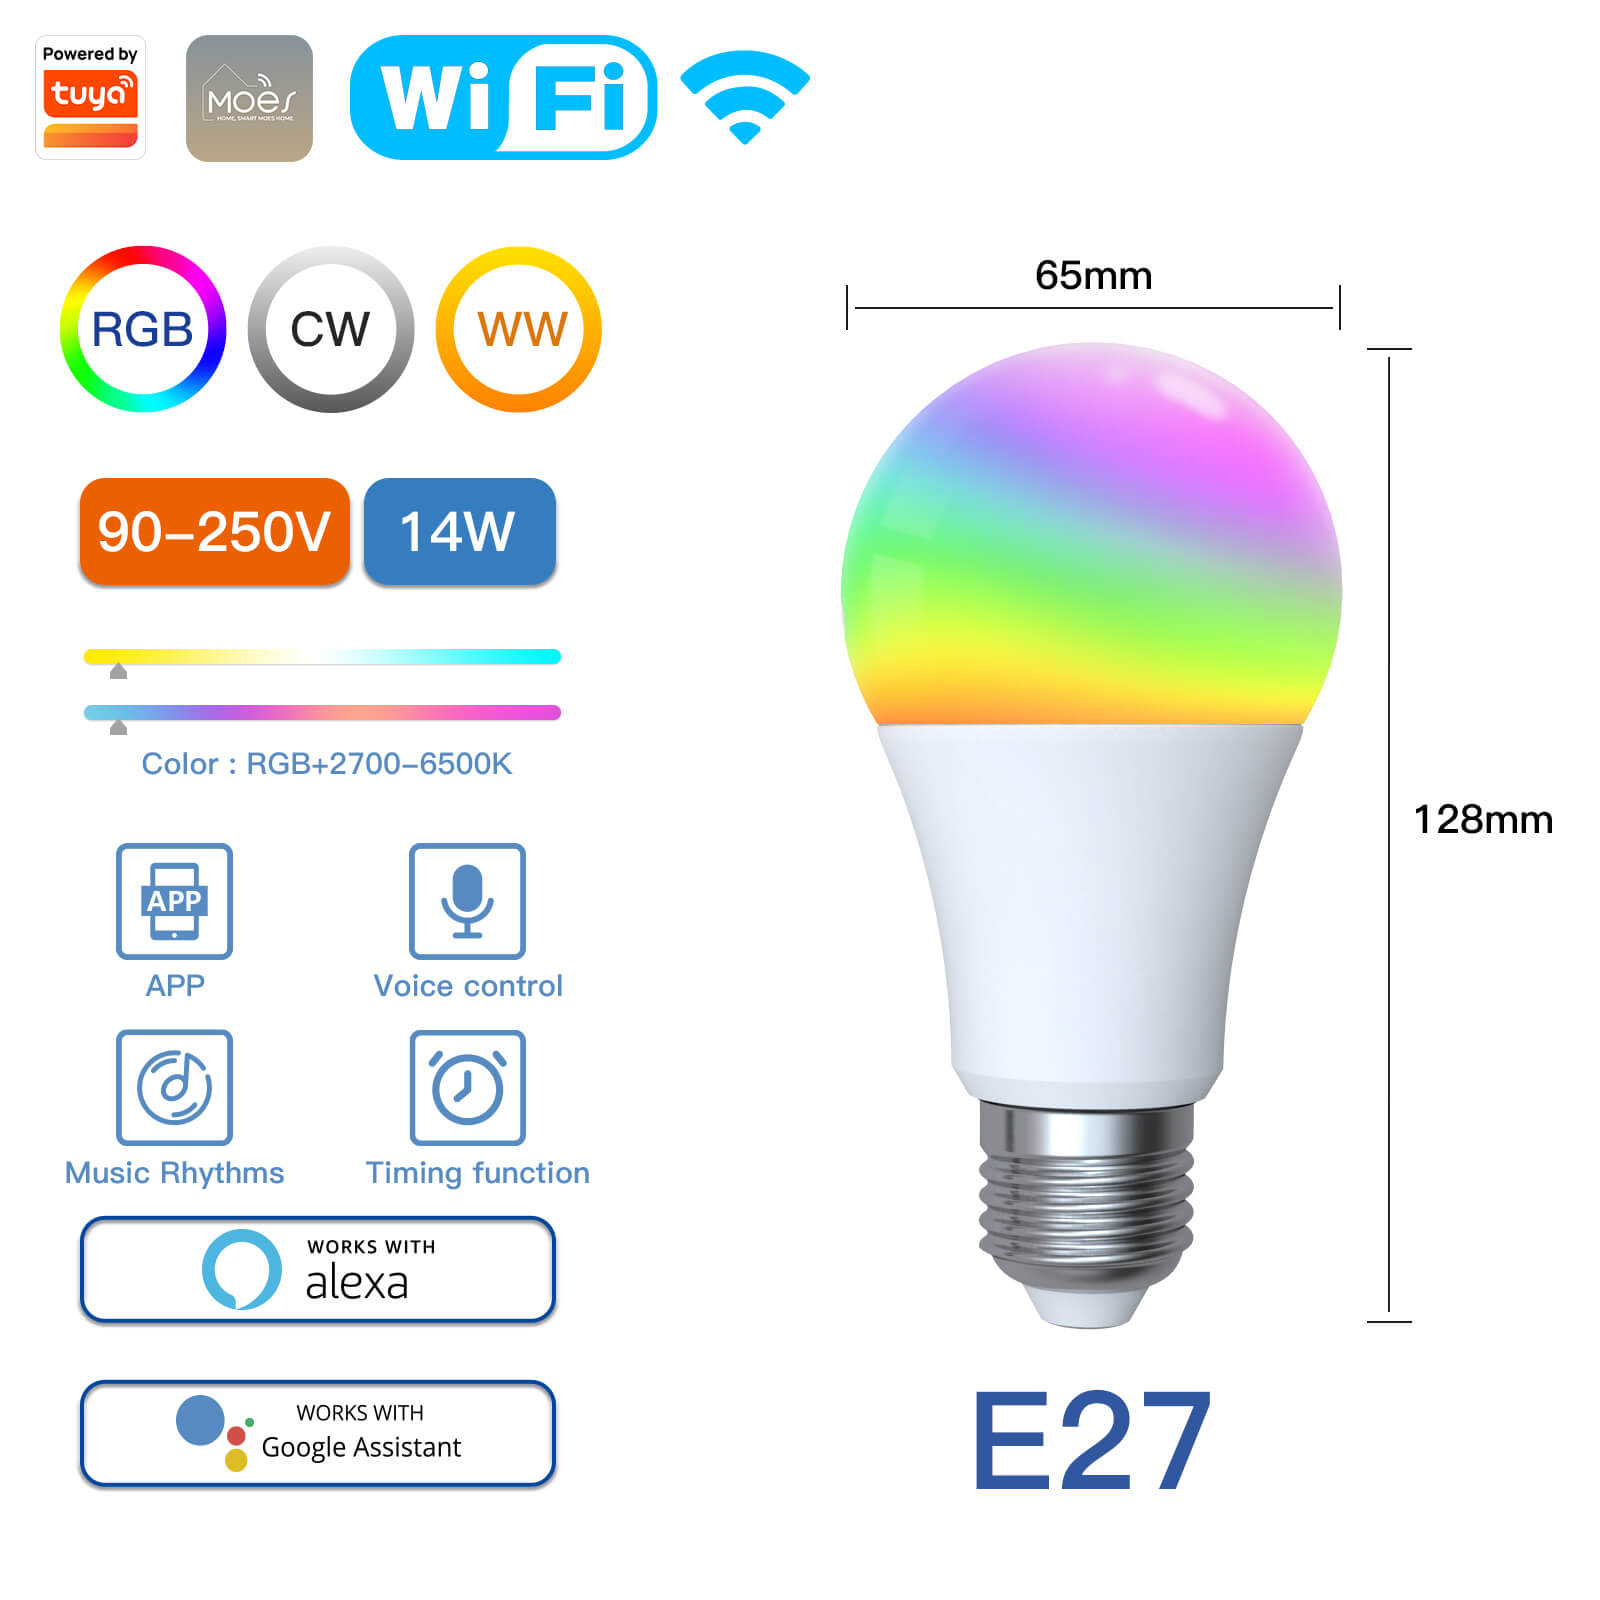 WiFi Smart LED Light Bulb Dimmable 14W RGB E27 Color Changea